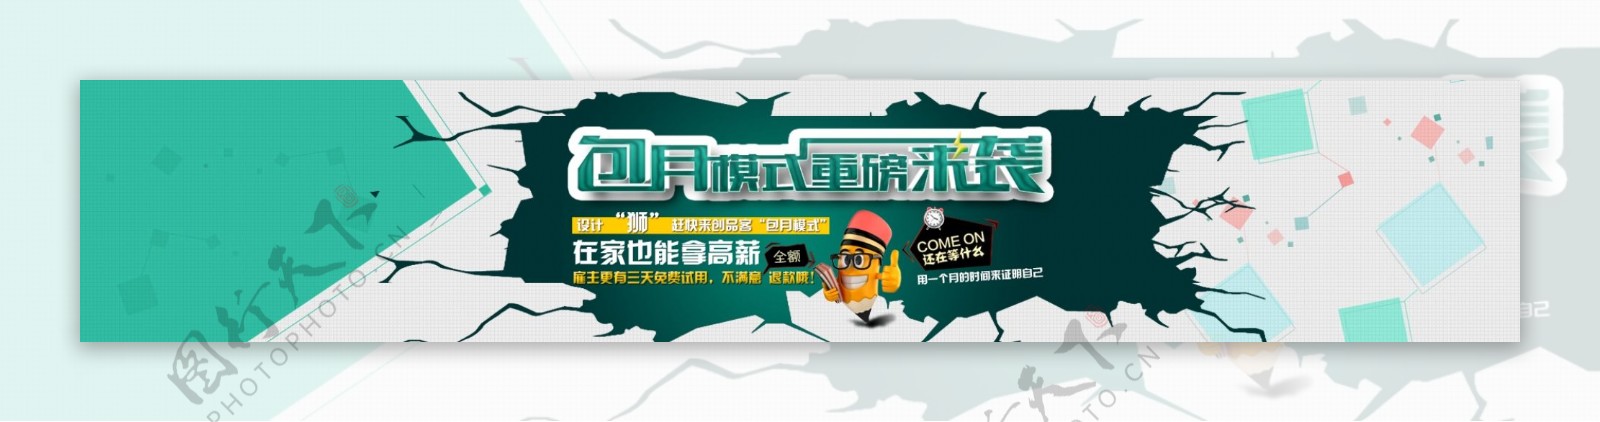 网站banner大图素材字体设计